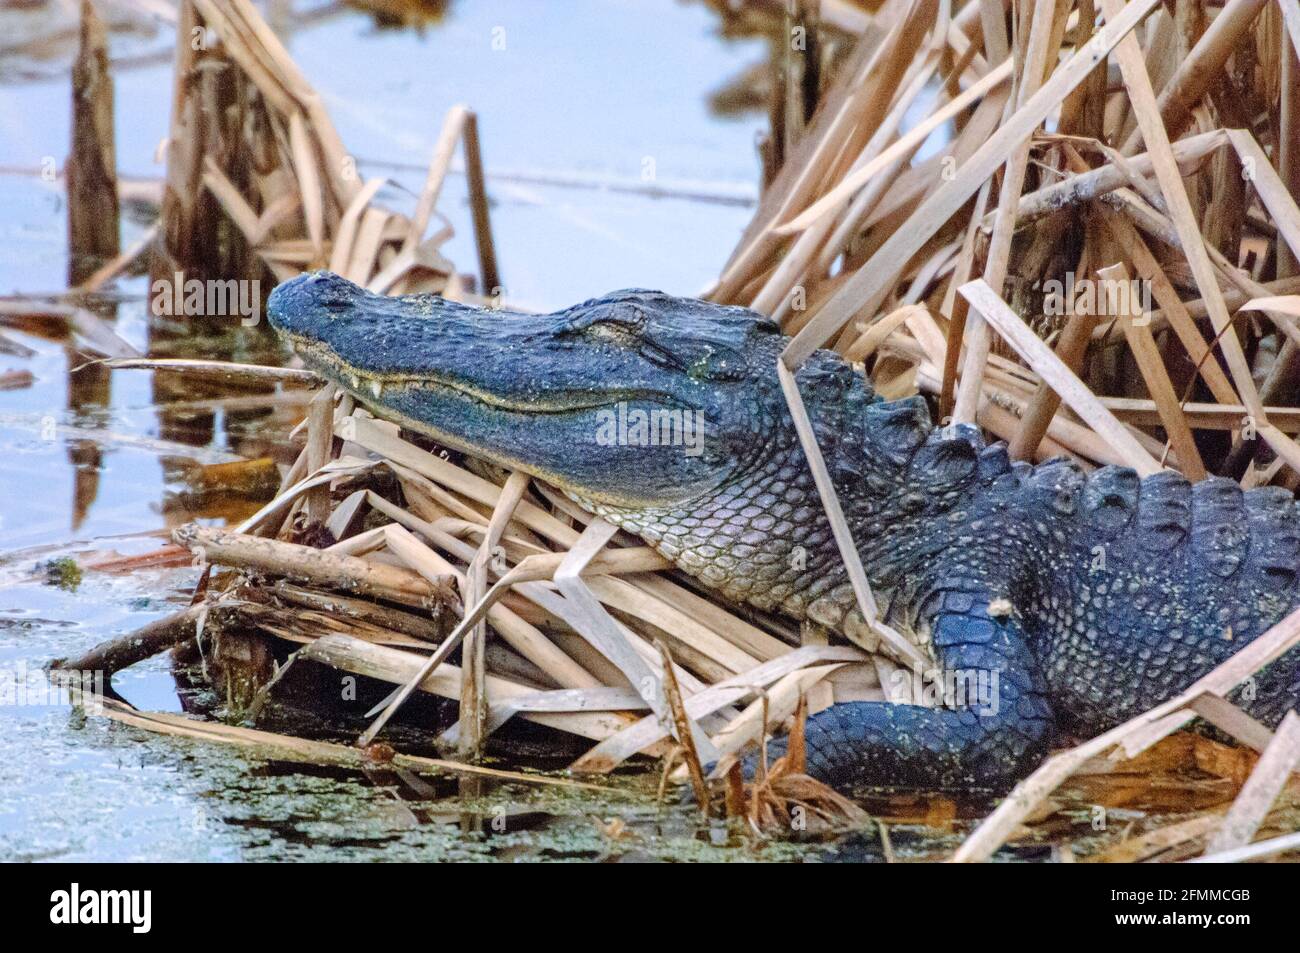 12 Foot American Alligator - Sleeping Beauty Stock Photo